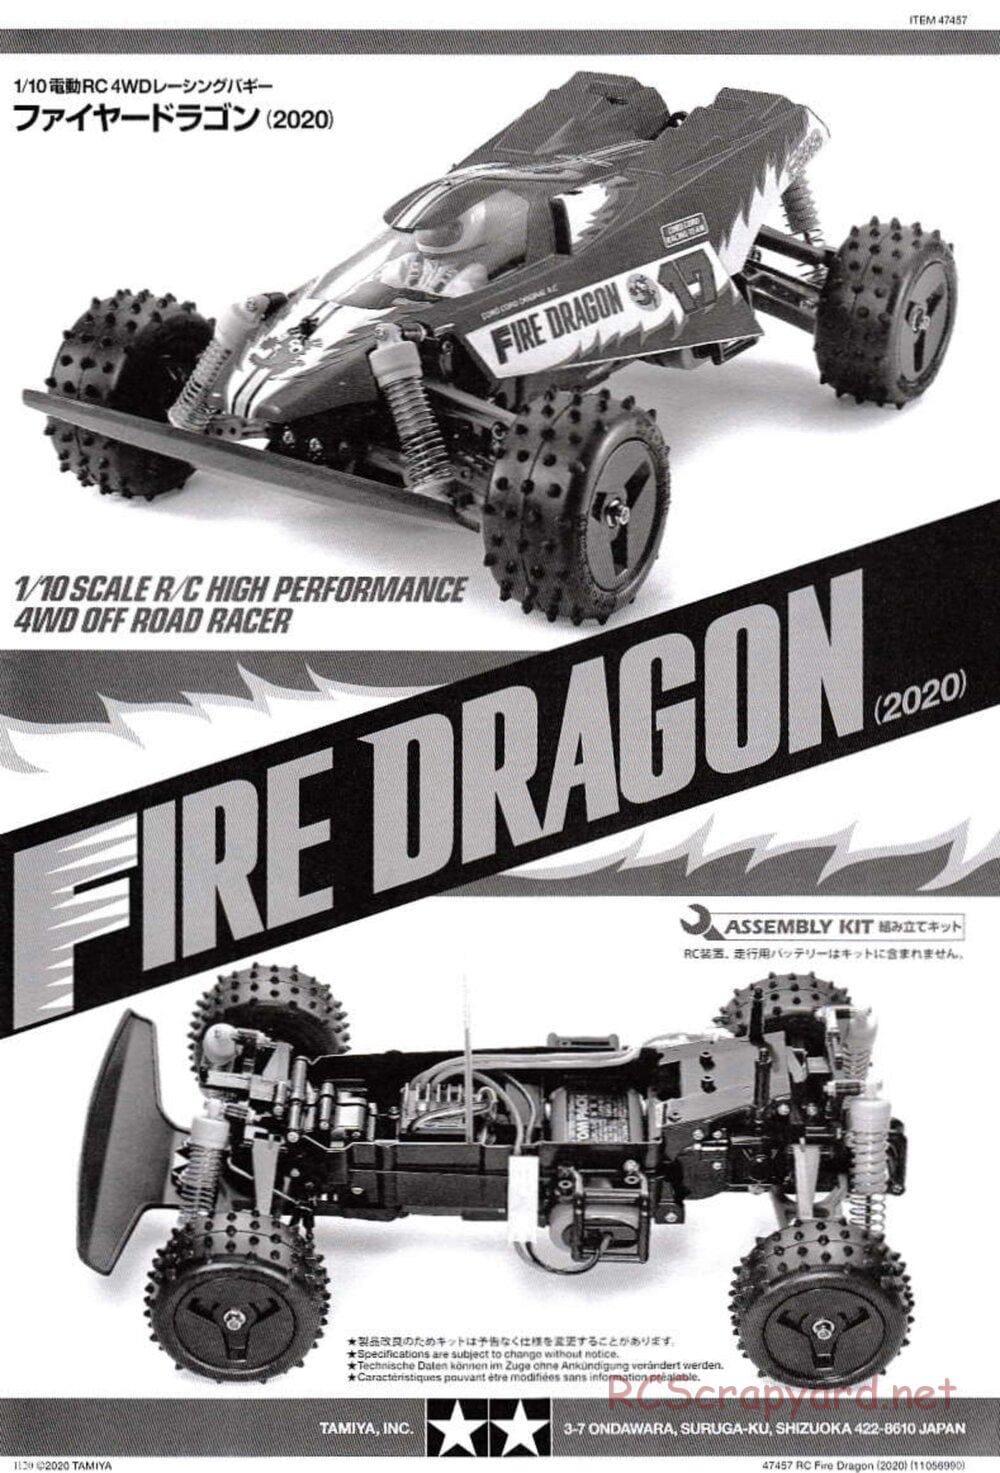 Tamiya - Fire Dragon (2020) Chassis - Manual - Page 1